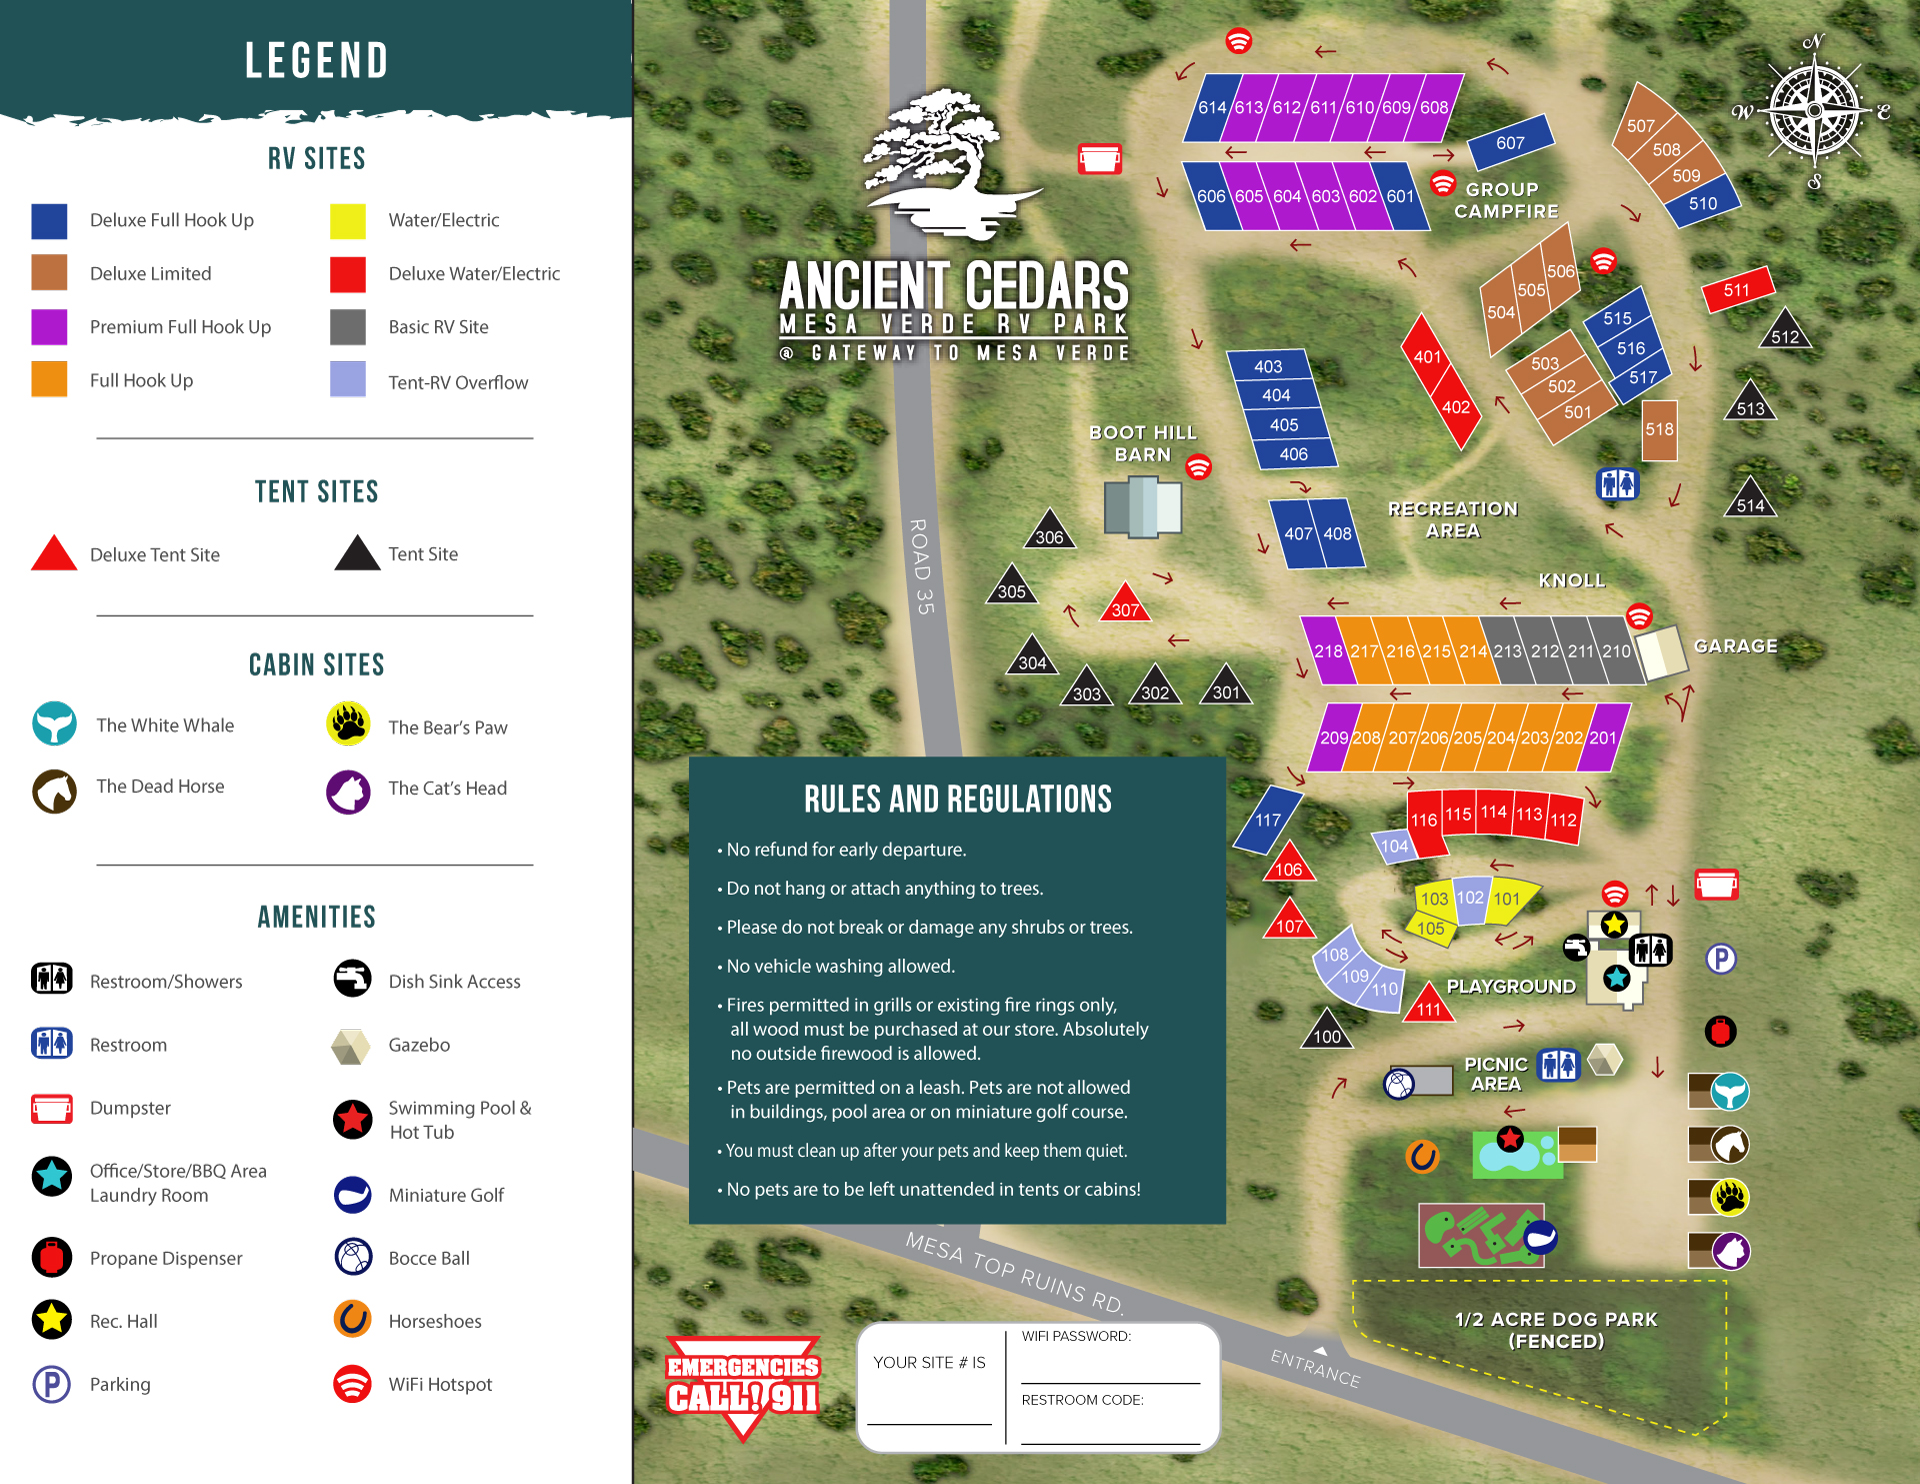 Ancient Cedars Park Map